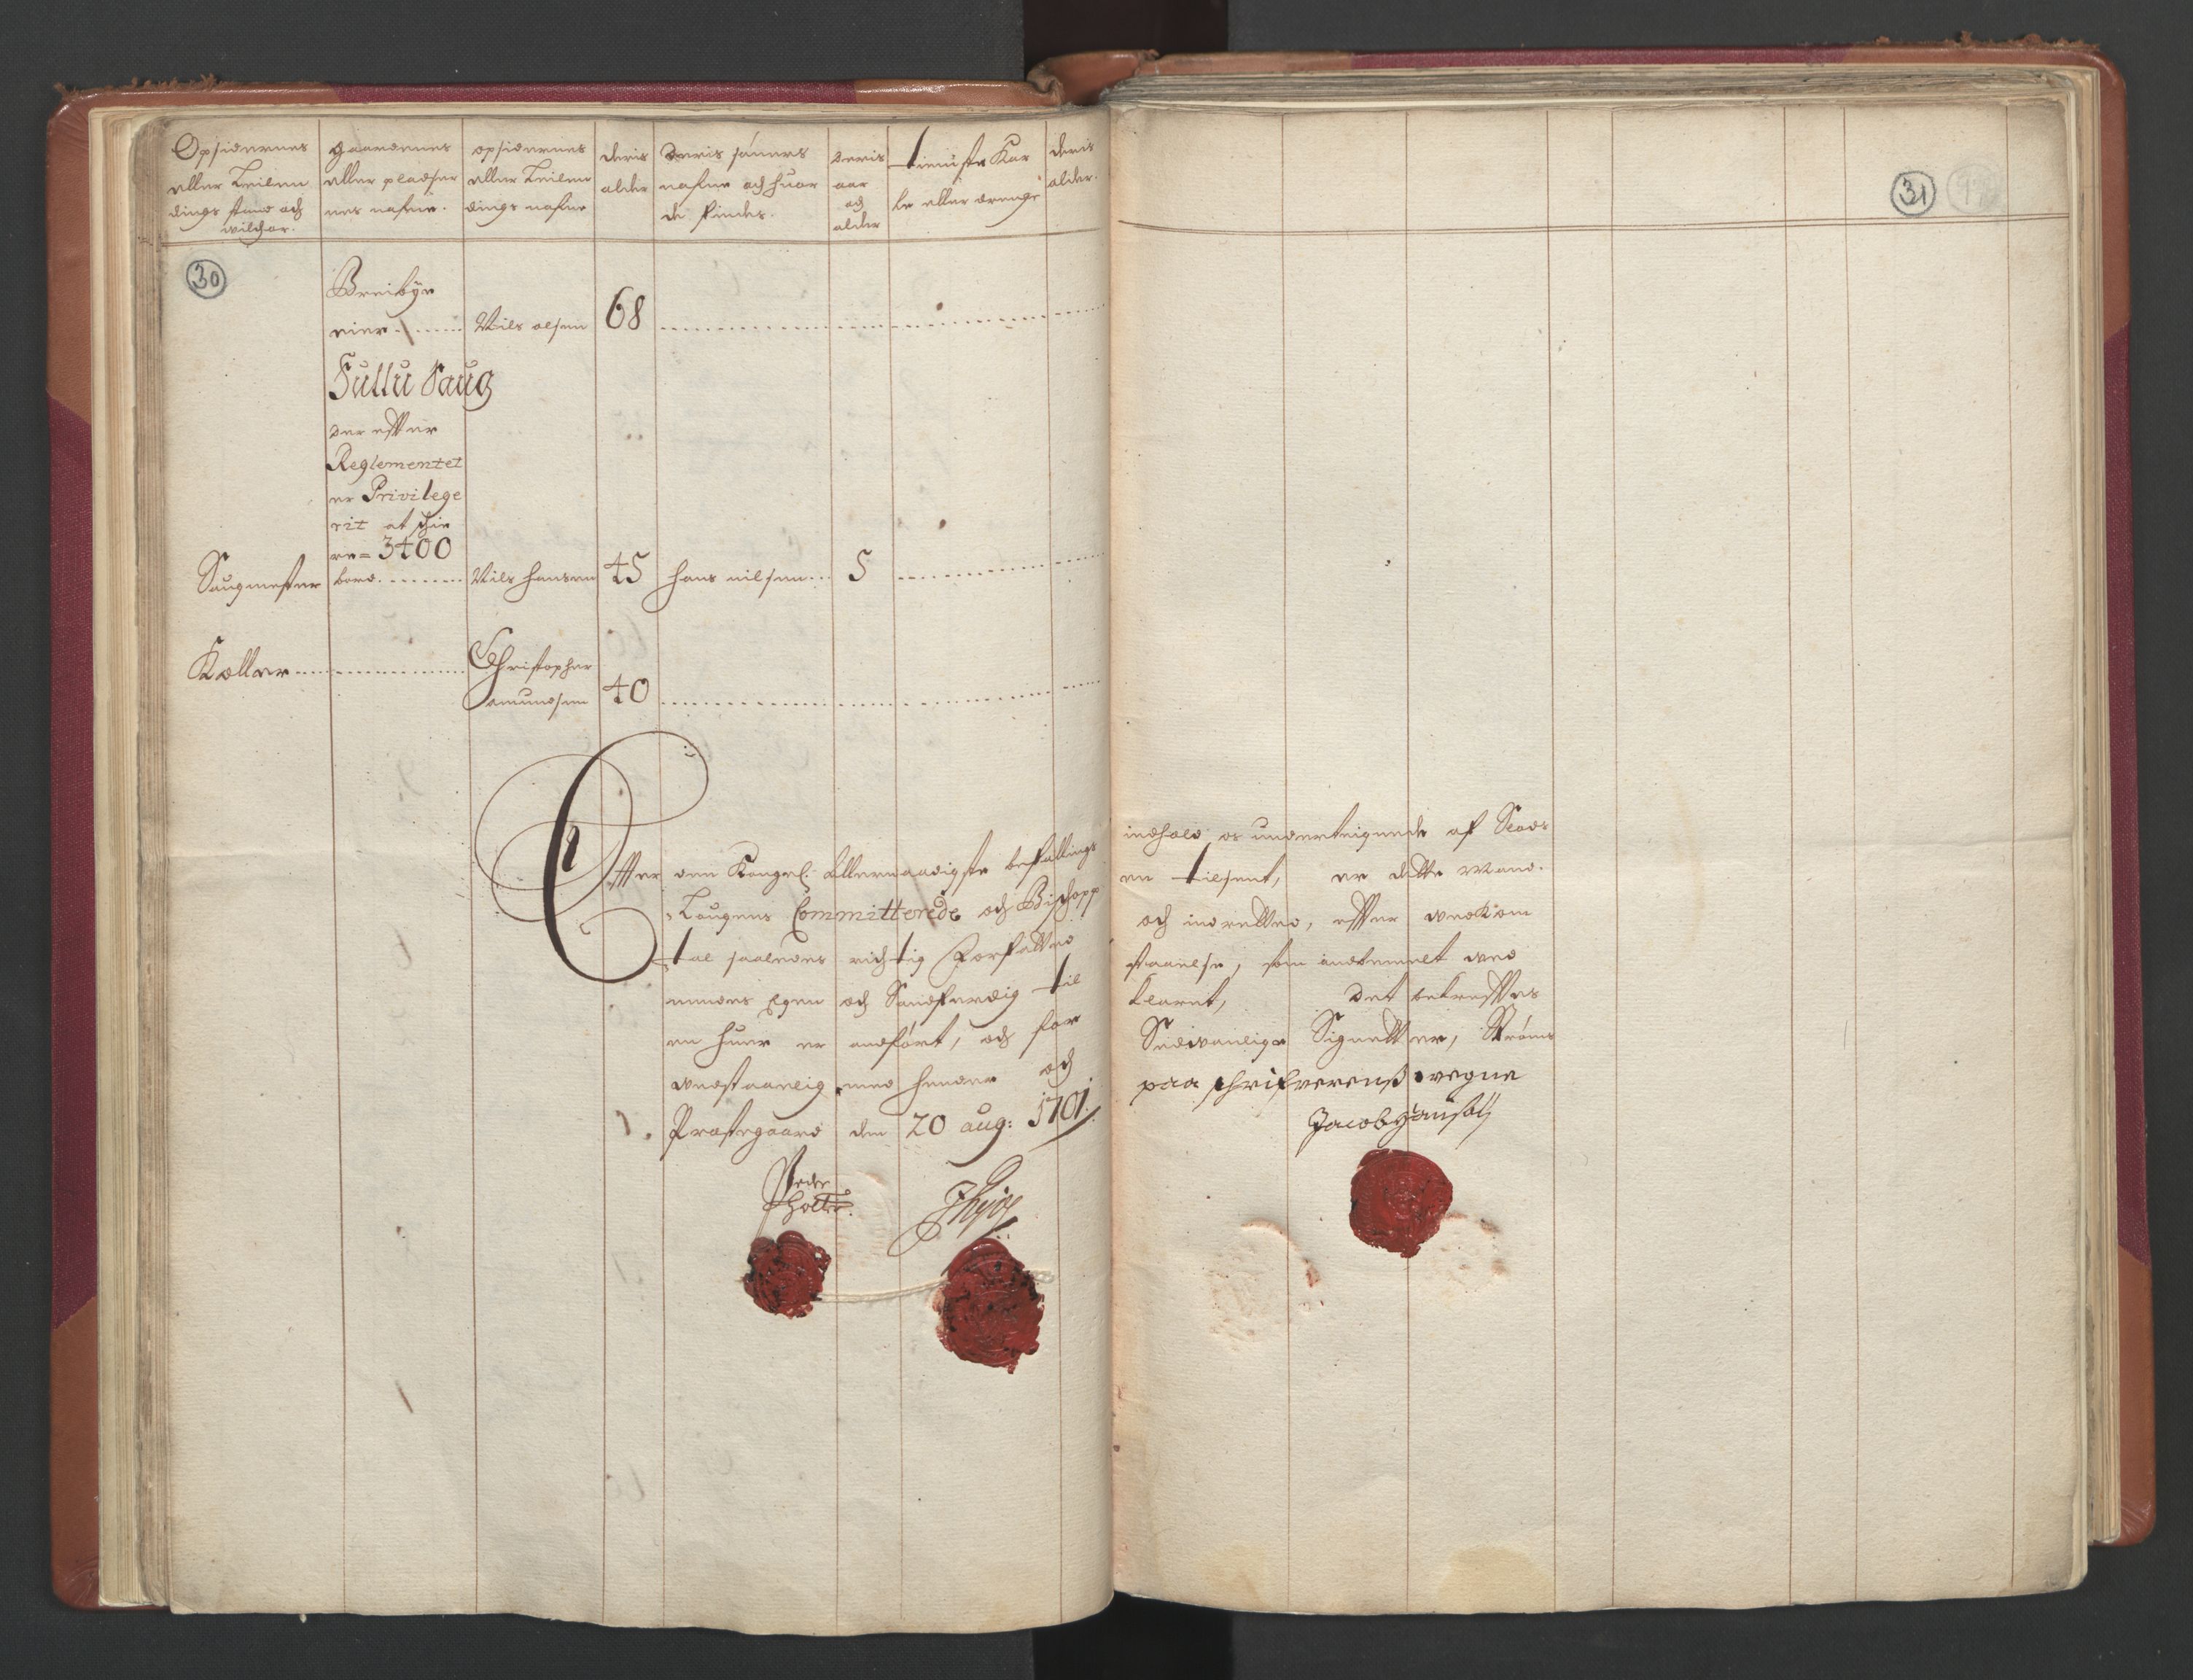 RA, Manntallet 1701, nr. 2: Solør, Odal og Østerdal fogderi og Larvik grevskap, 1701, s. 30-31